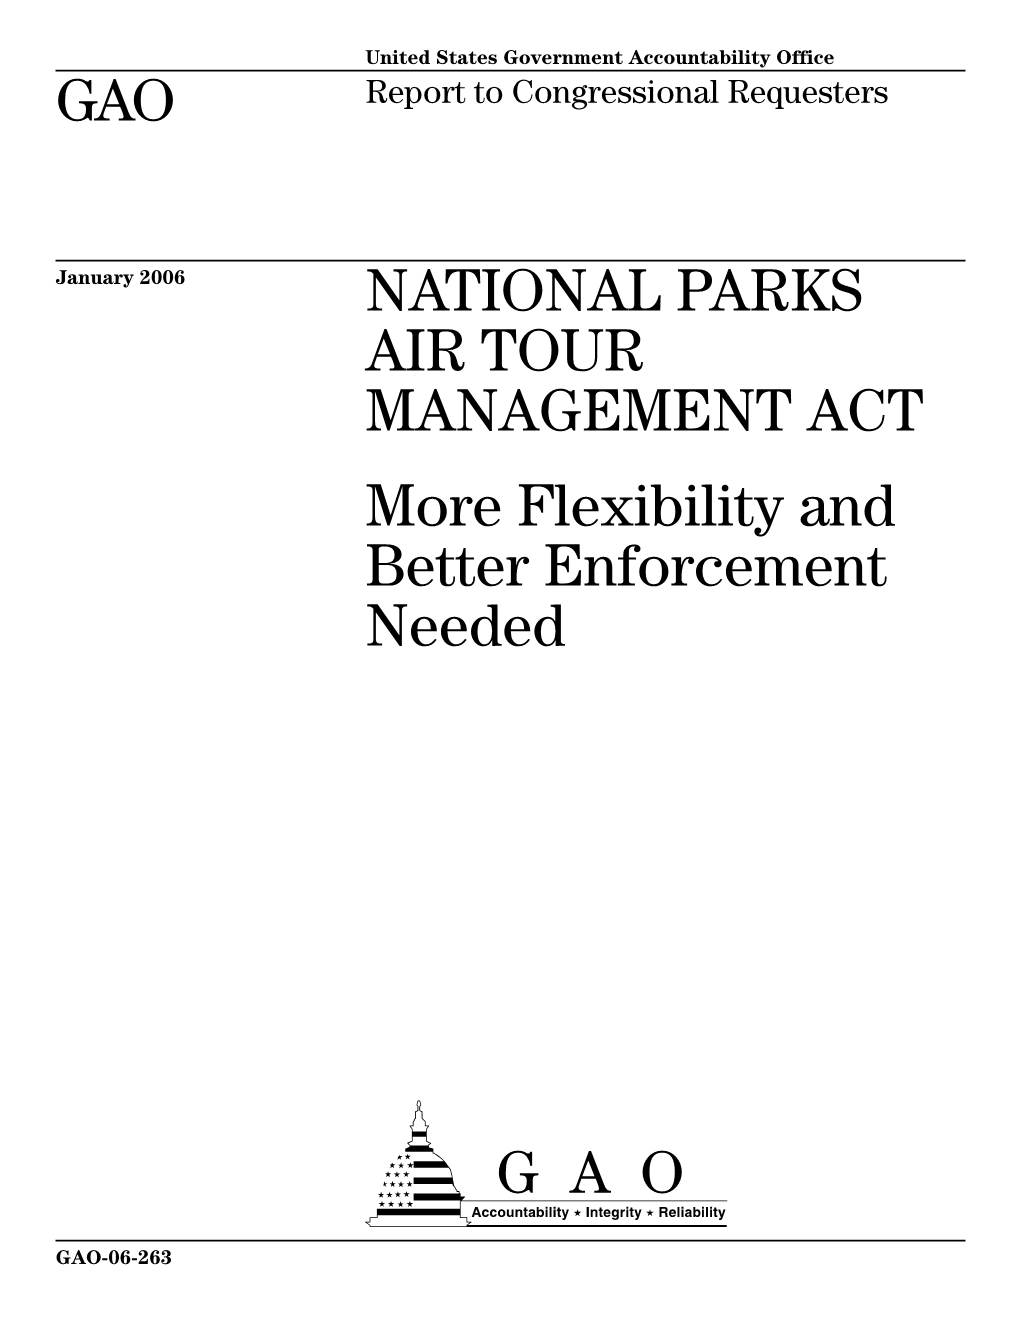 GAO-06-263 National Parks Air Tour Management Act